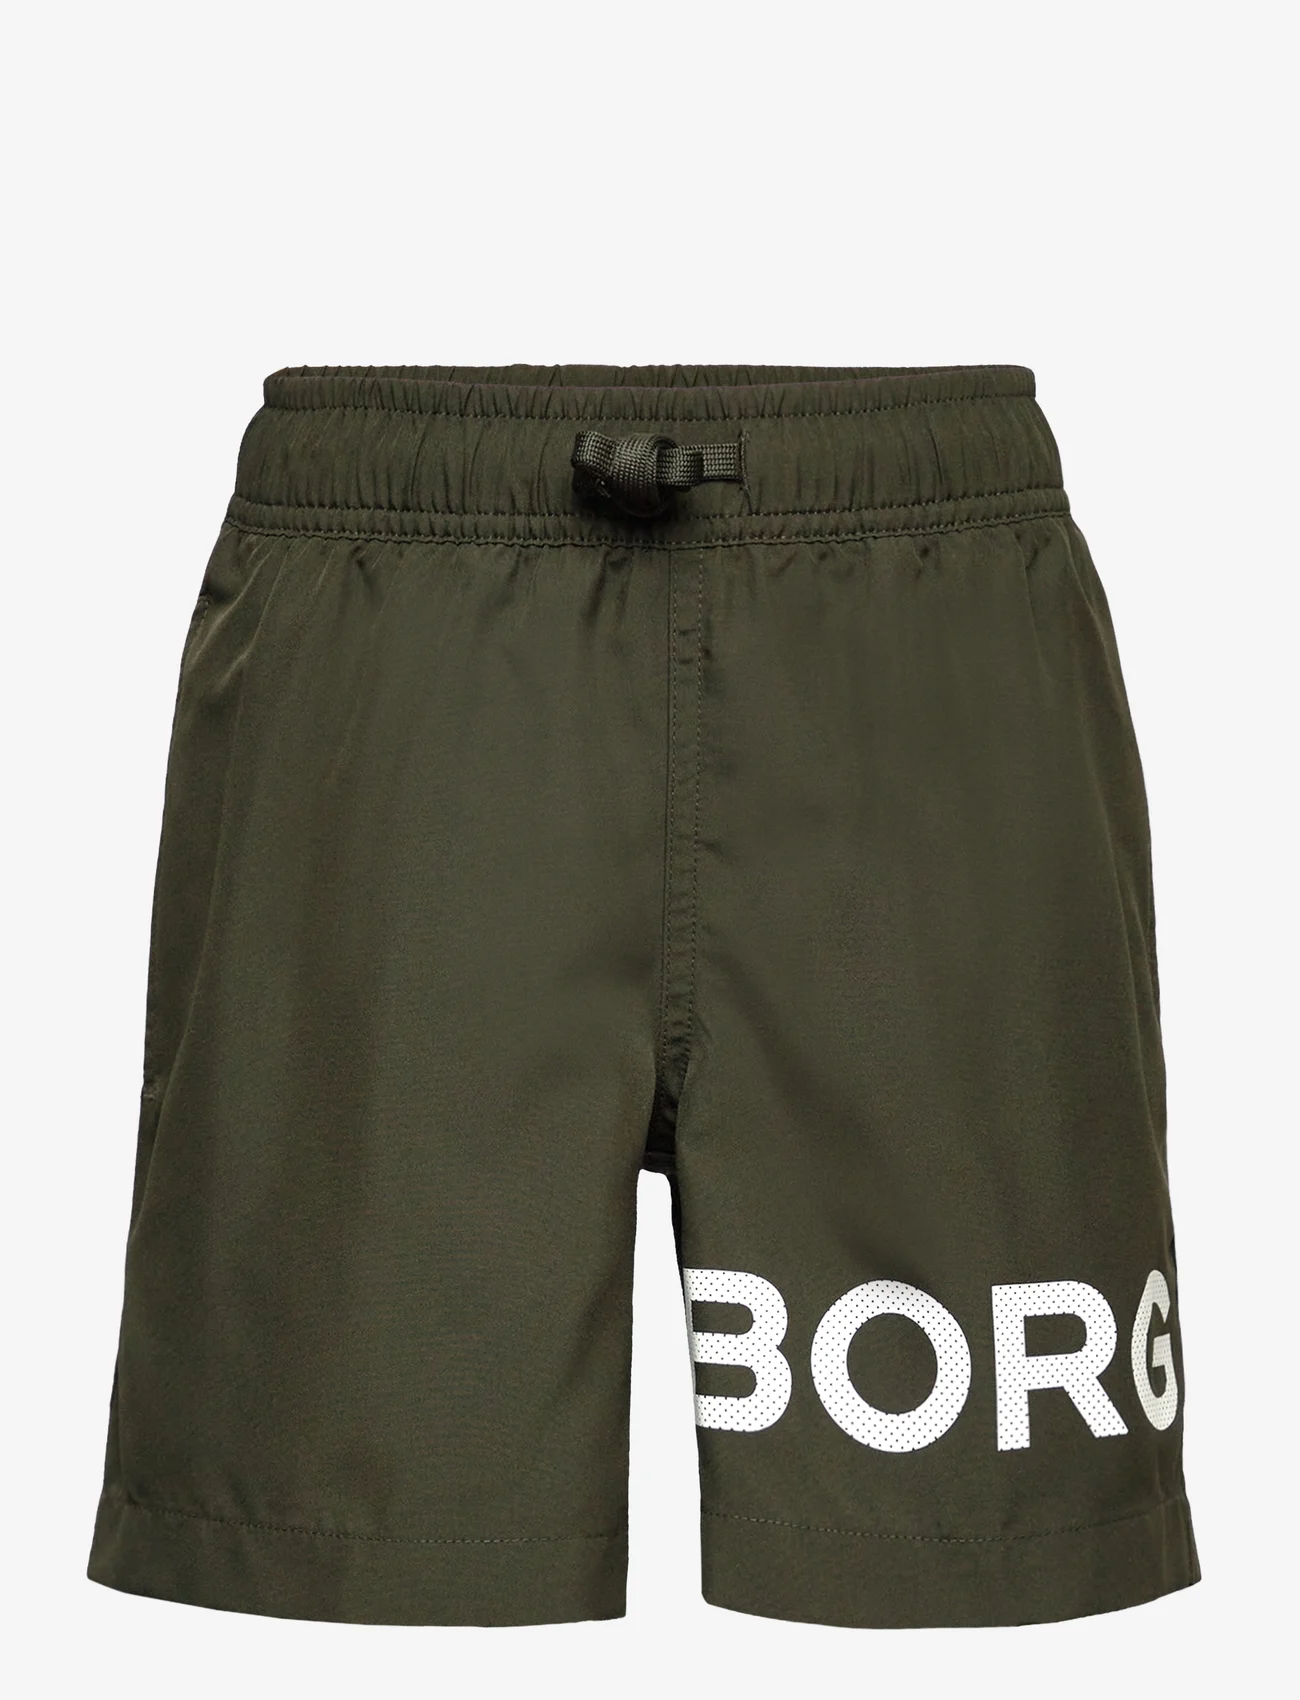 Björn Borg - BORG SWIM SHORTS - summer savings - rosin - 0